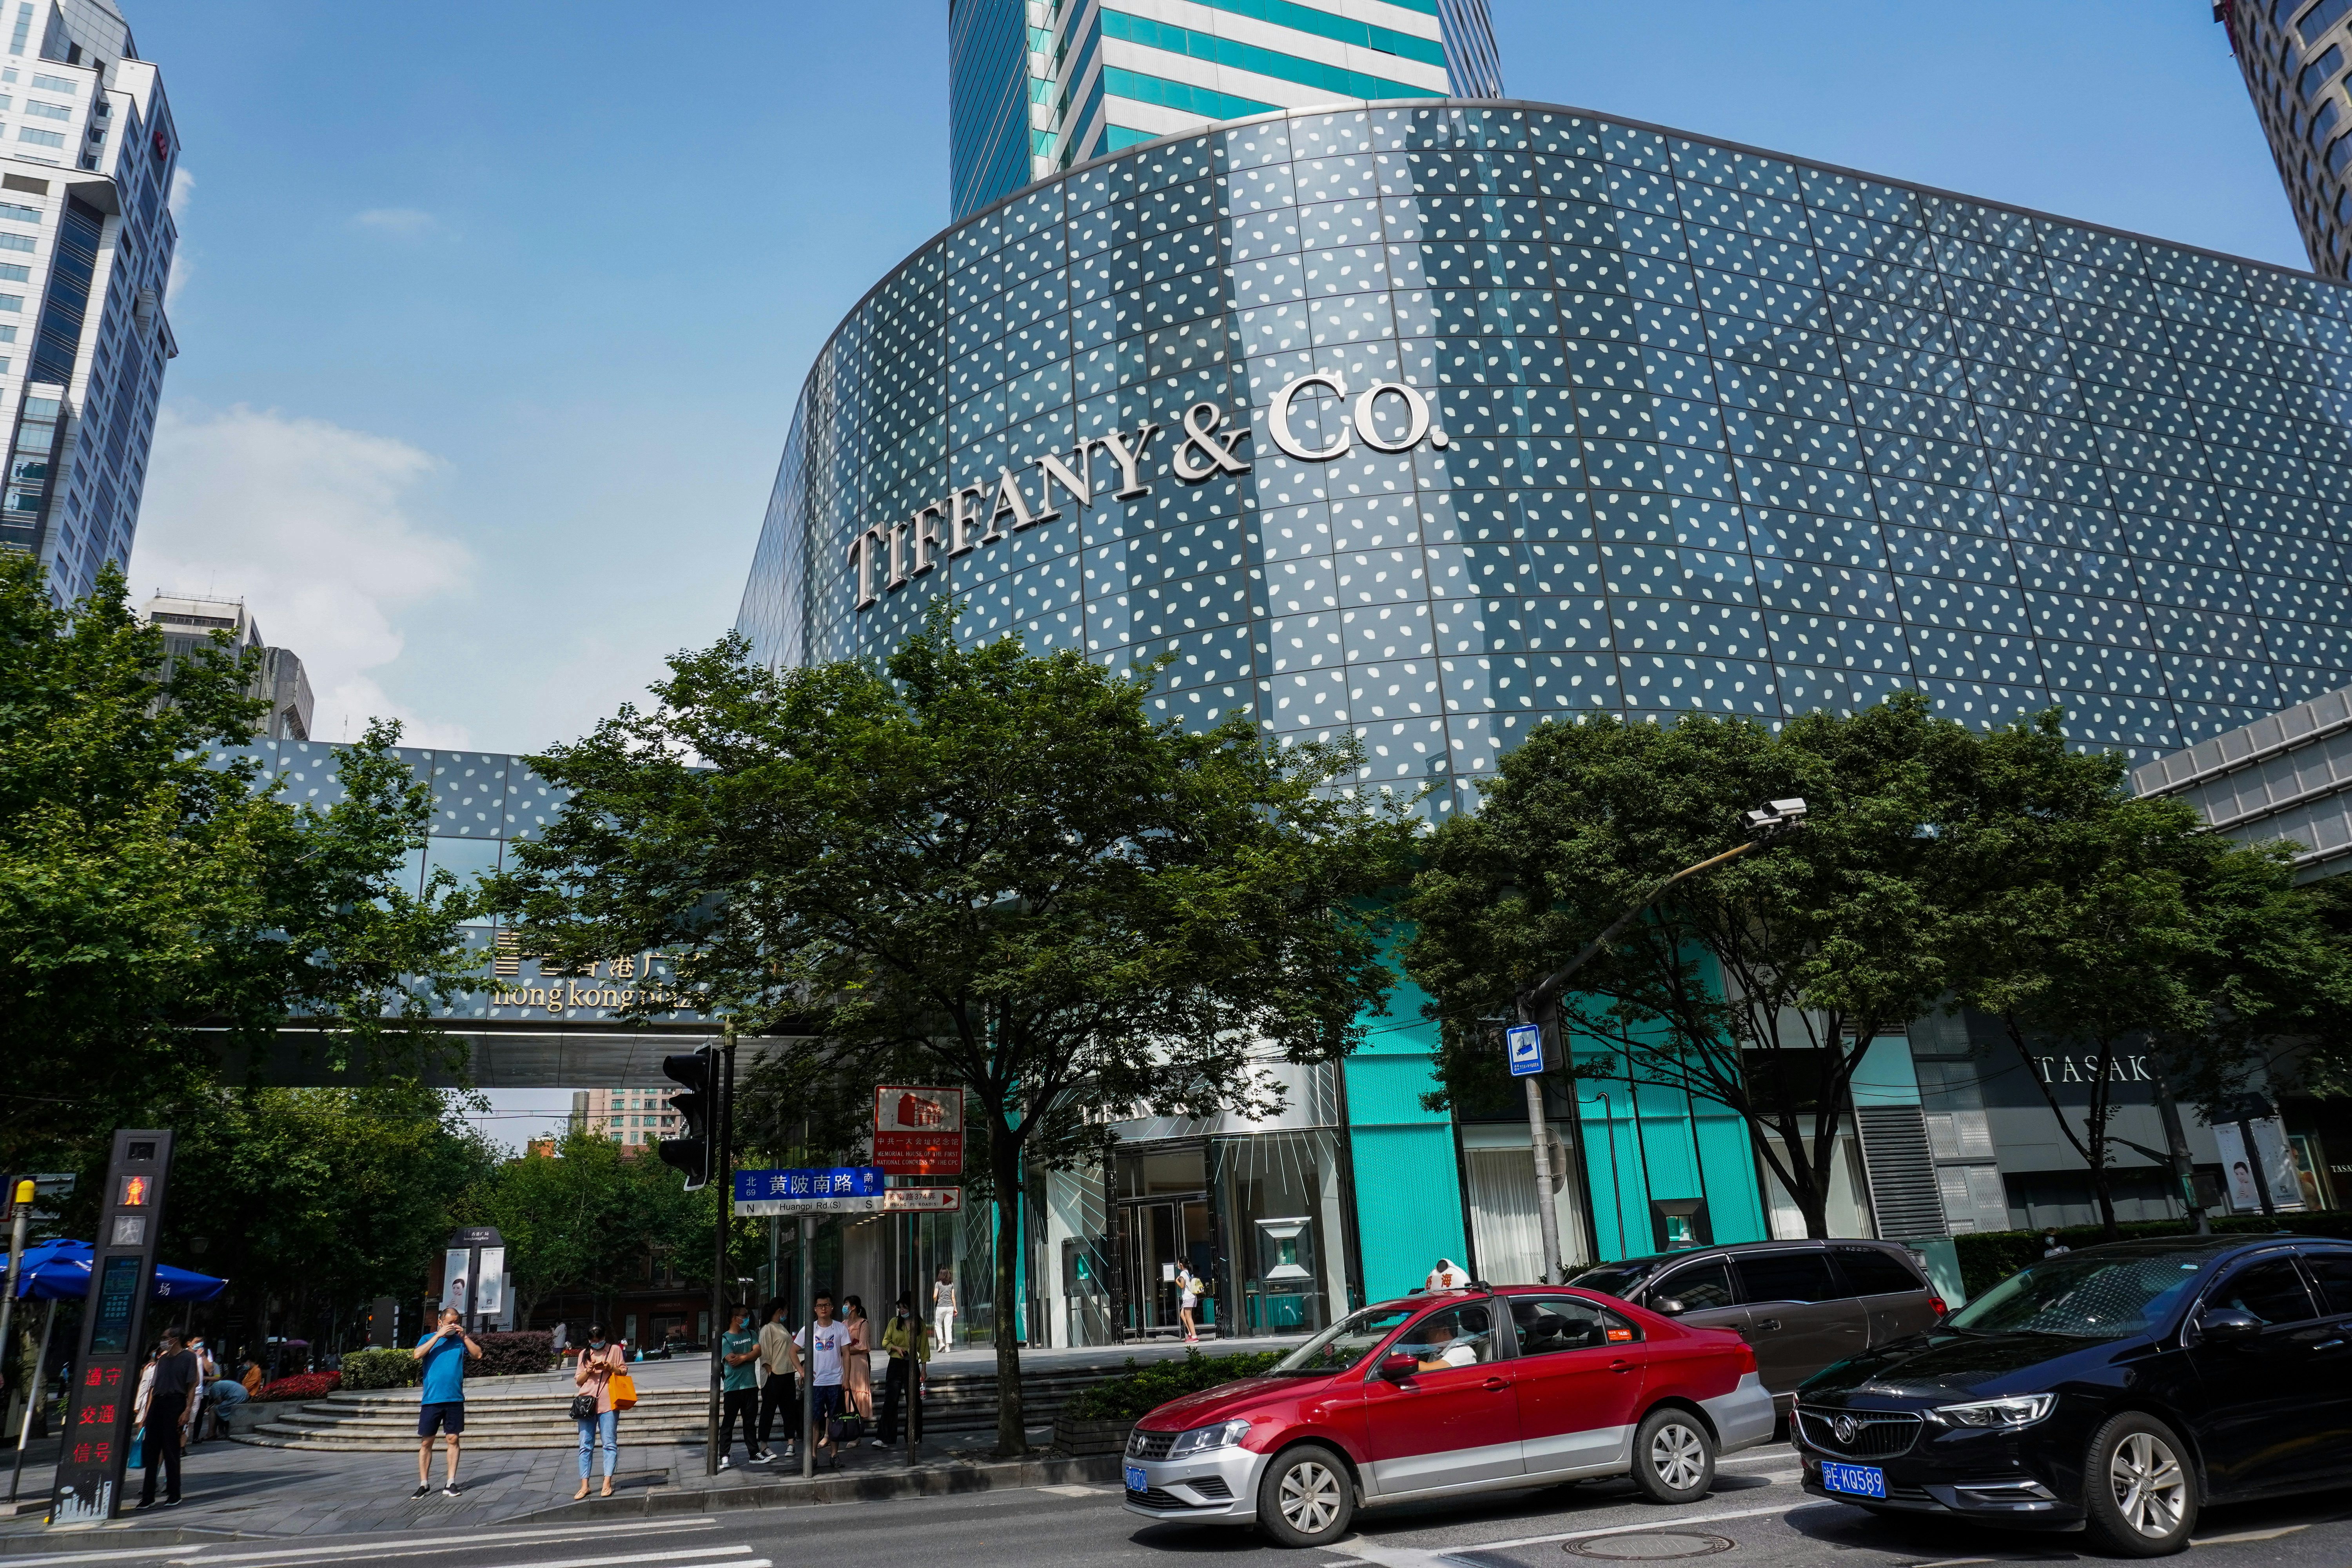 Tiffany & Co store in Shanghai, China. Shutterstock.